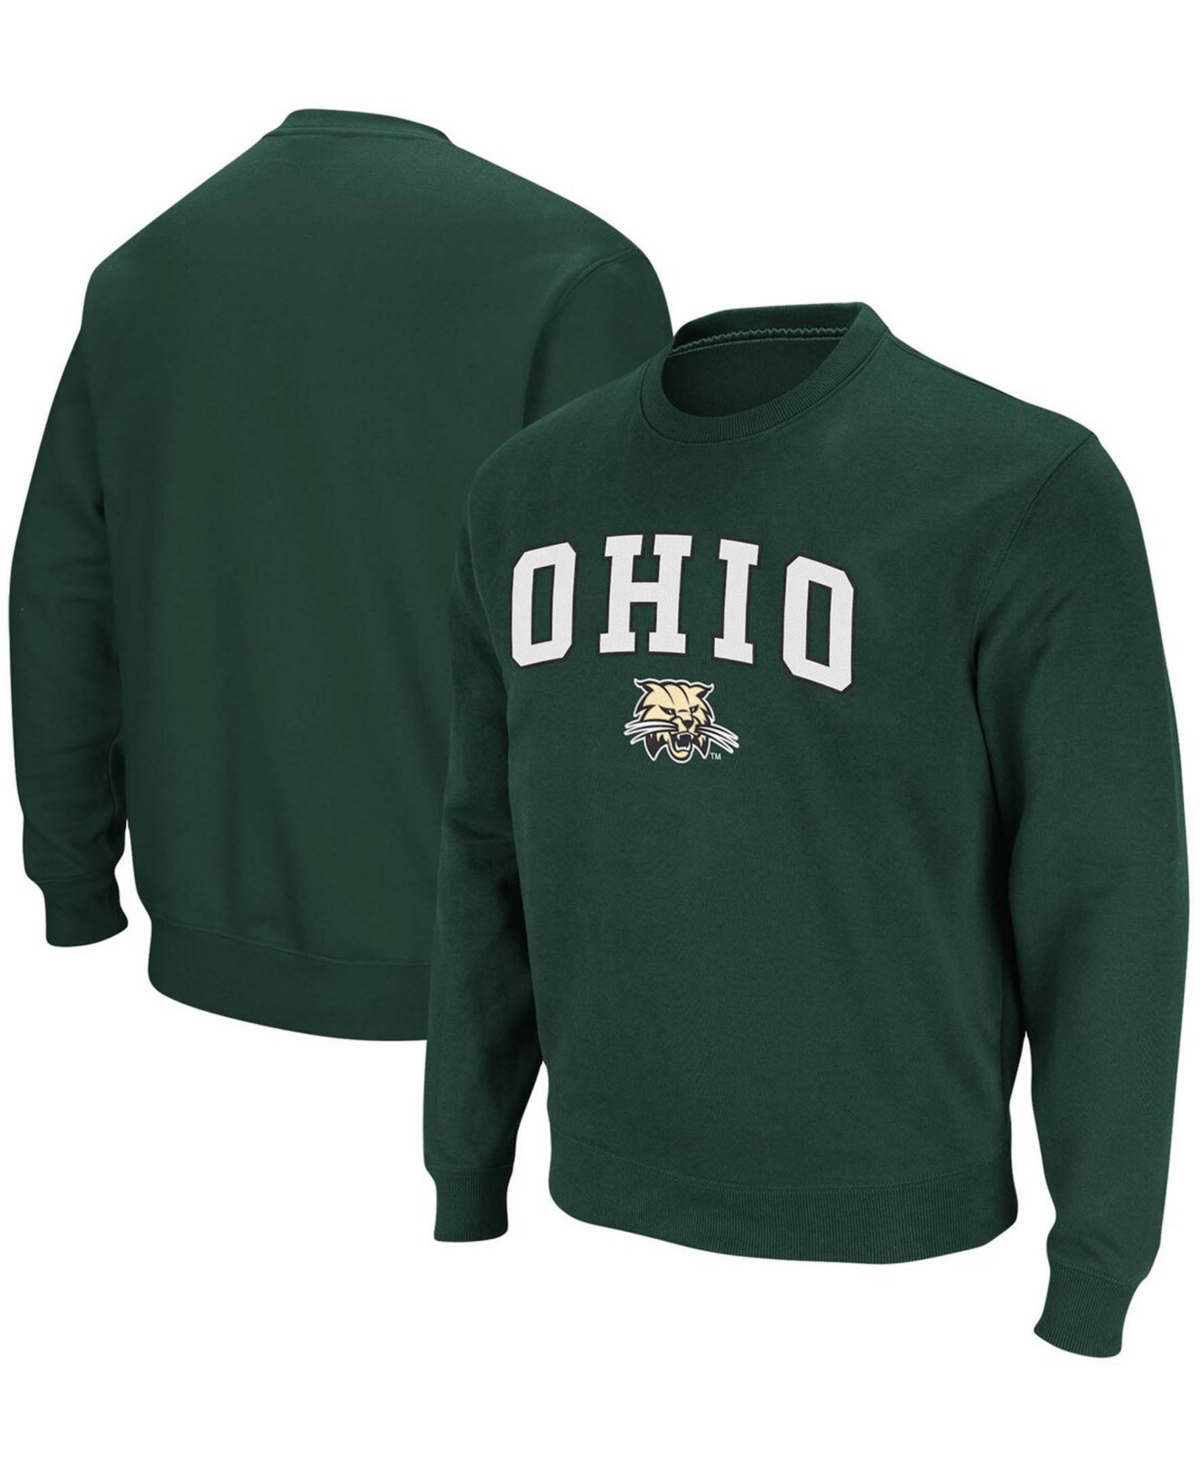 Shop Colosseum Men's Green Ohio Bobcats Arch Logo Tackle Twill Pullover Sweatshirt